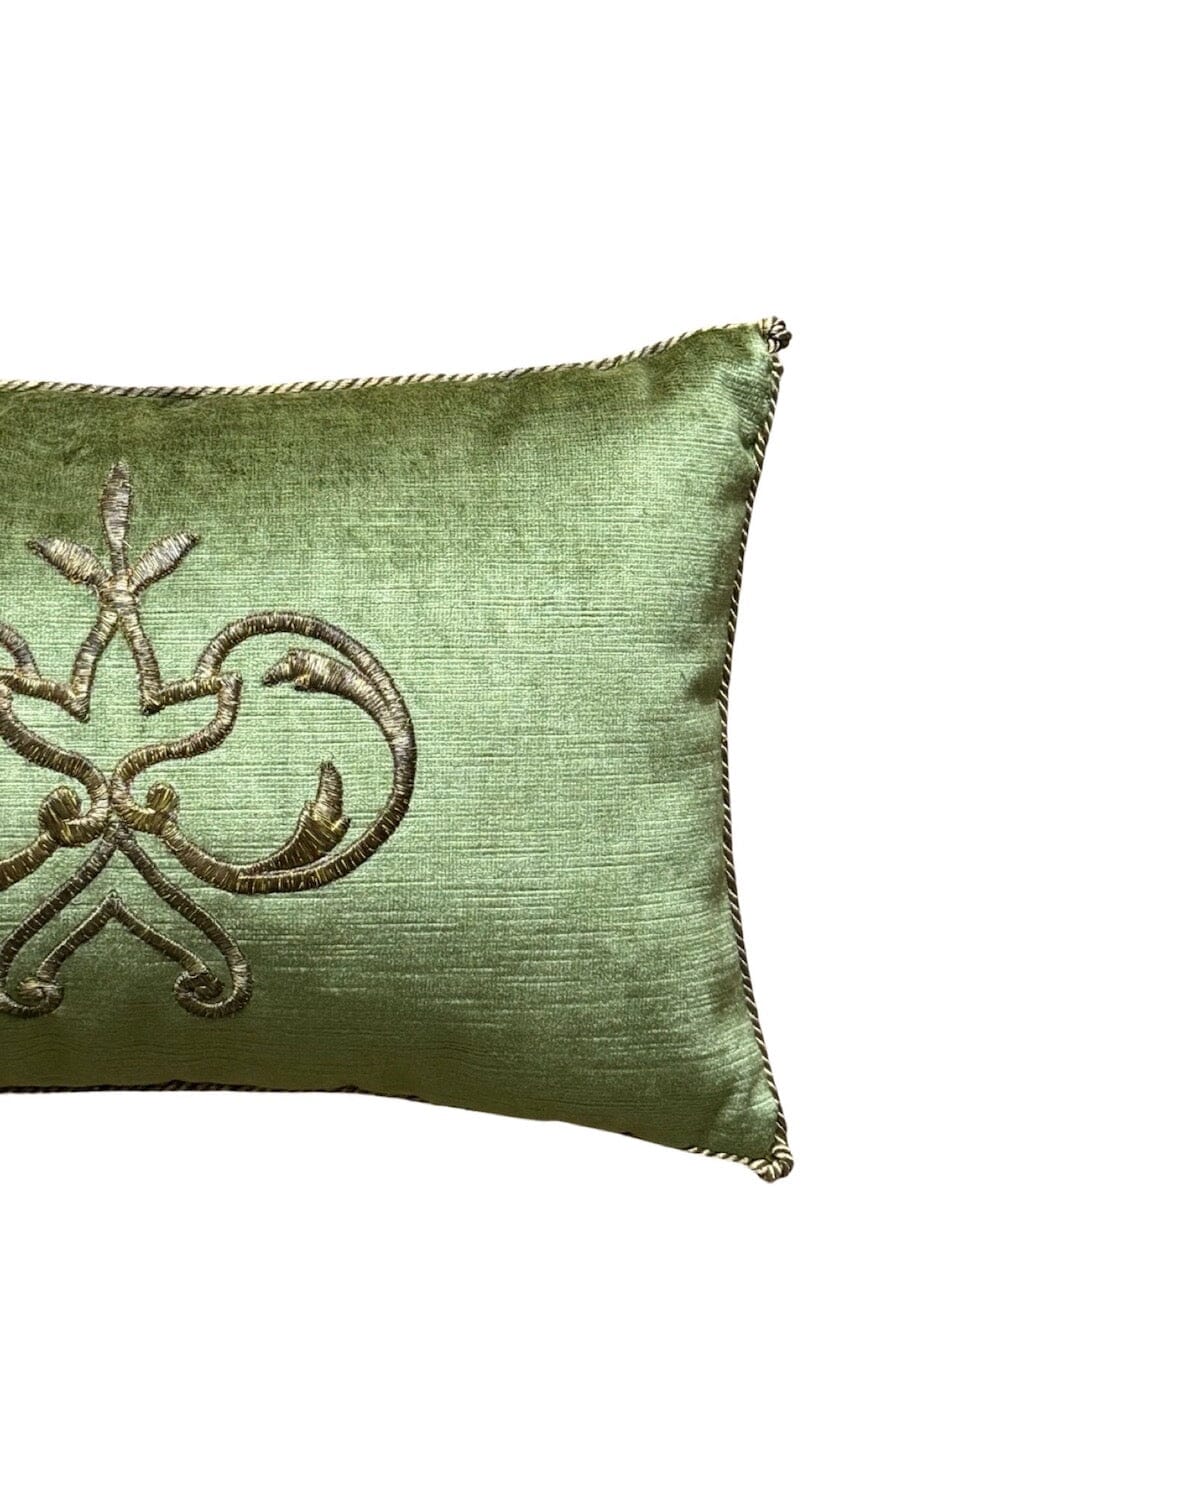 Antique Ottoman Empire Raised Gold Metallic Embroidery (#E021424 | 10 x 15